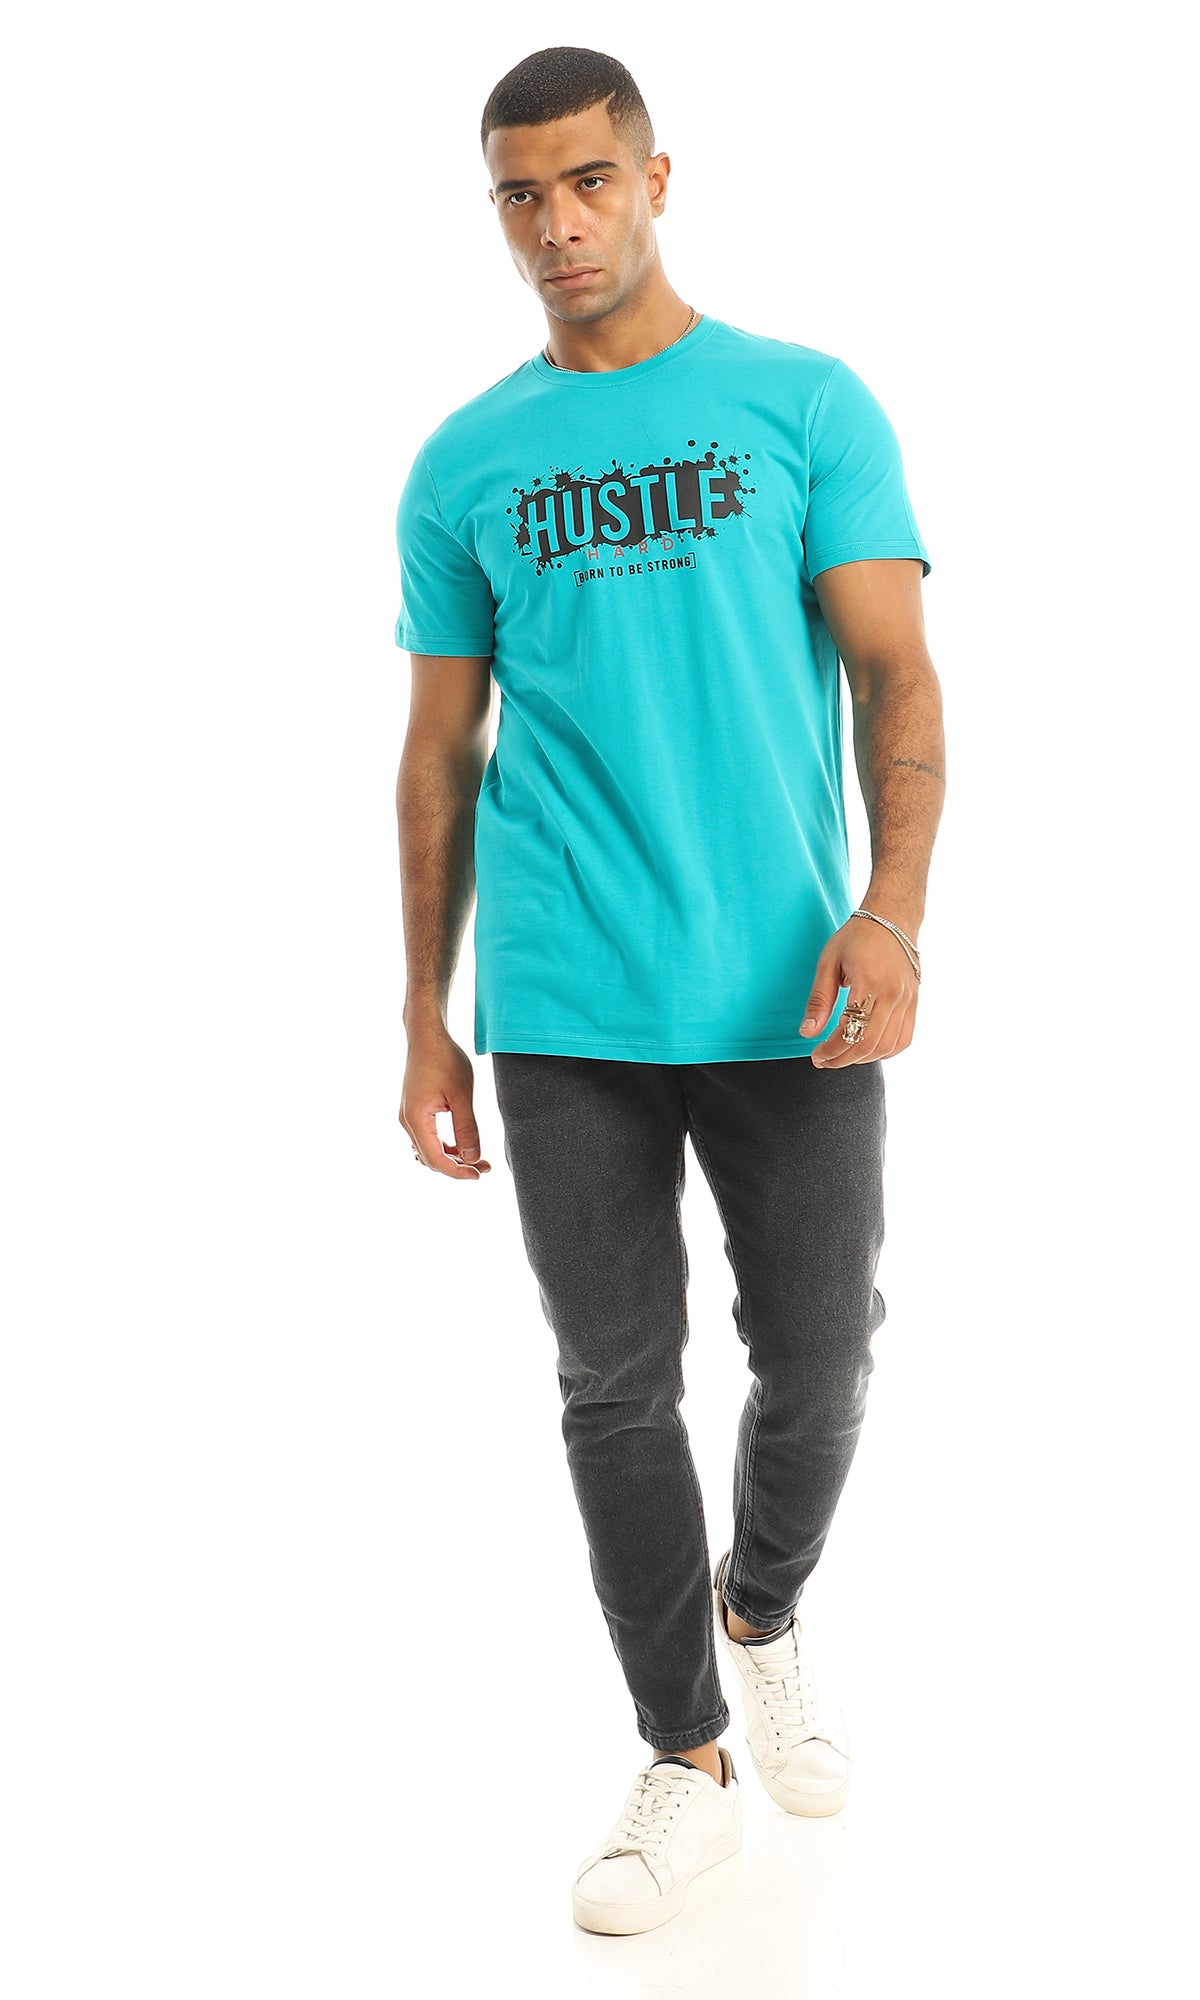 O154997 Chest Printed "Hustle" Dark Turquoise Tee